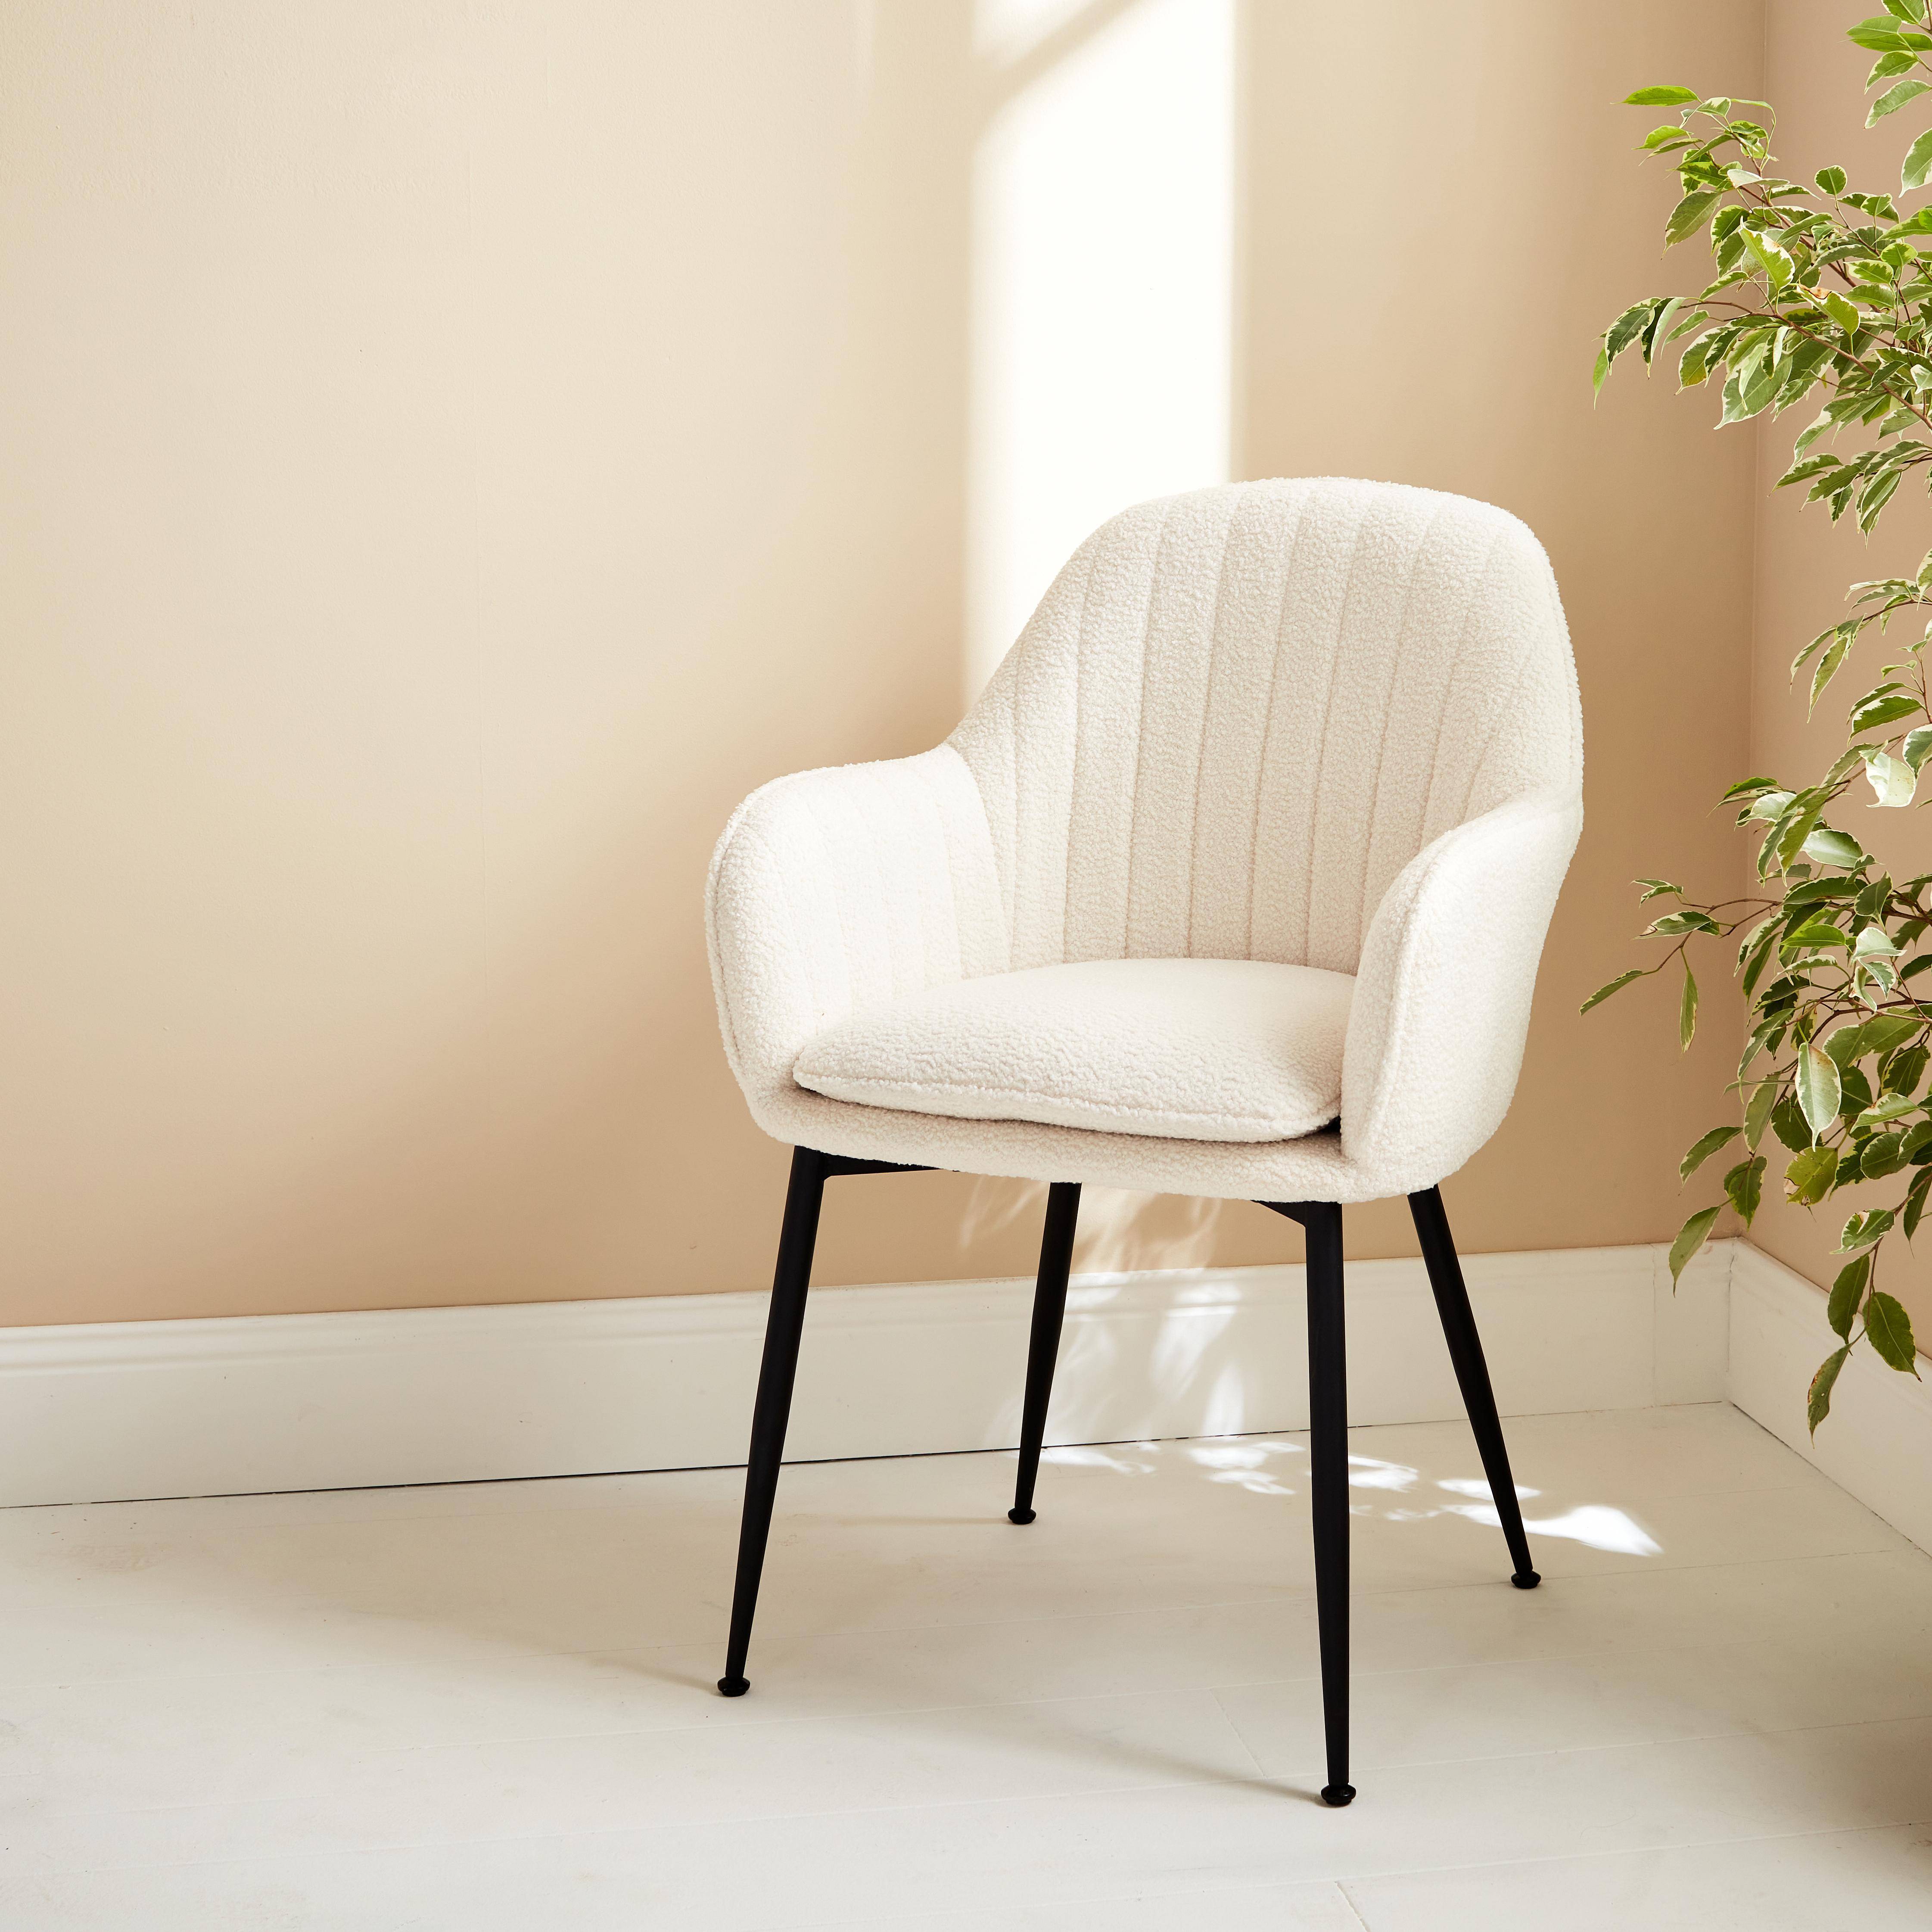 Boucle armchair with metal legs, 58x58x85cm - Shella Boucle - White Photo1